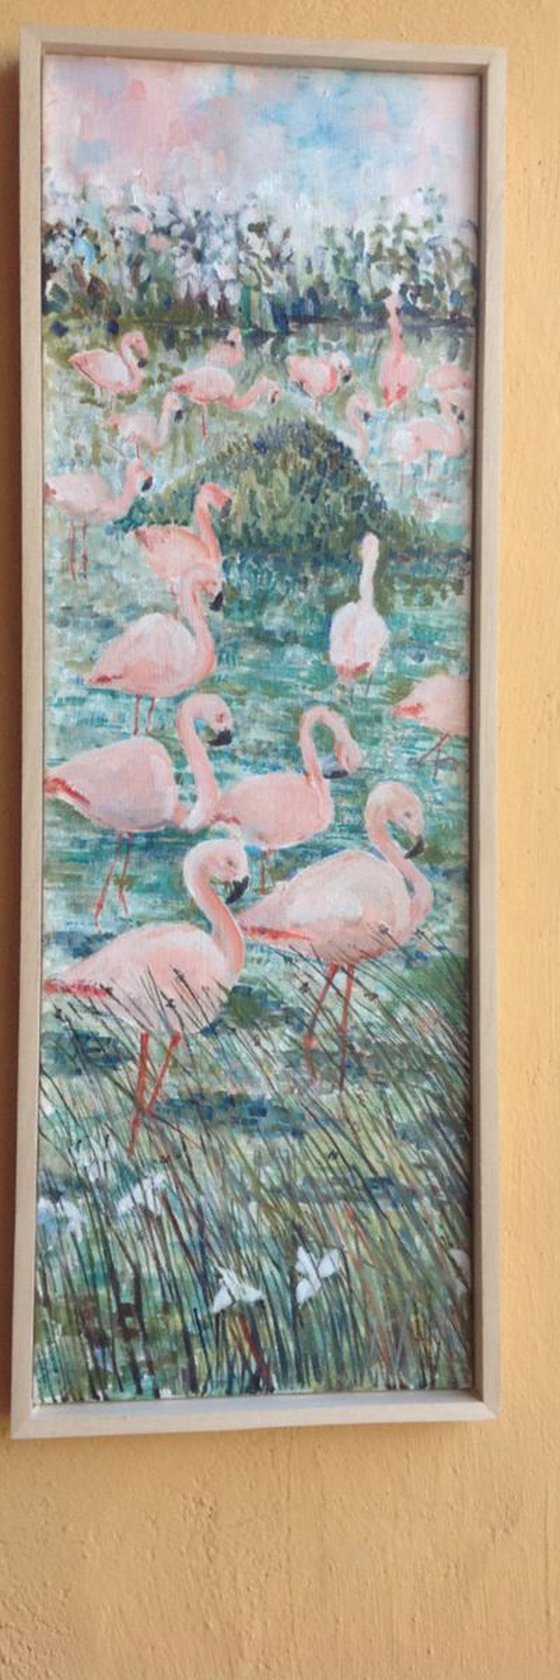 Tall Flamingos